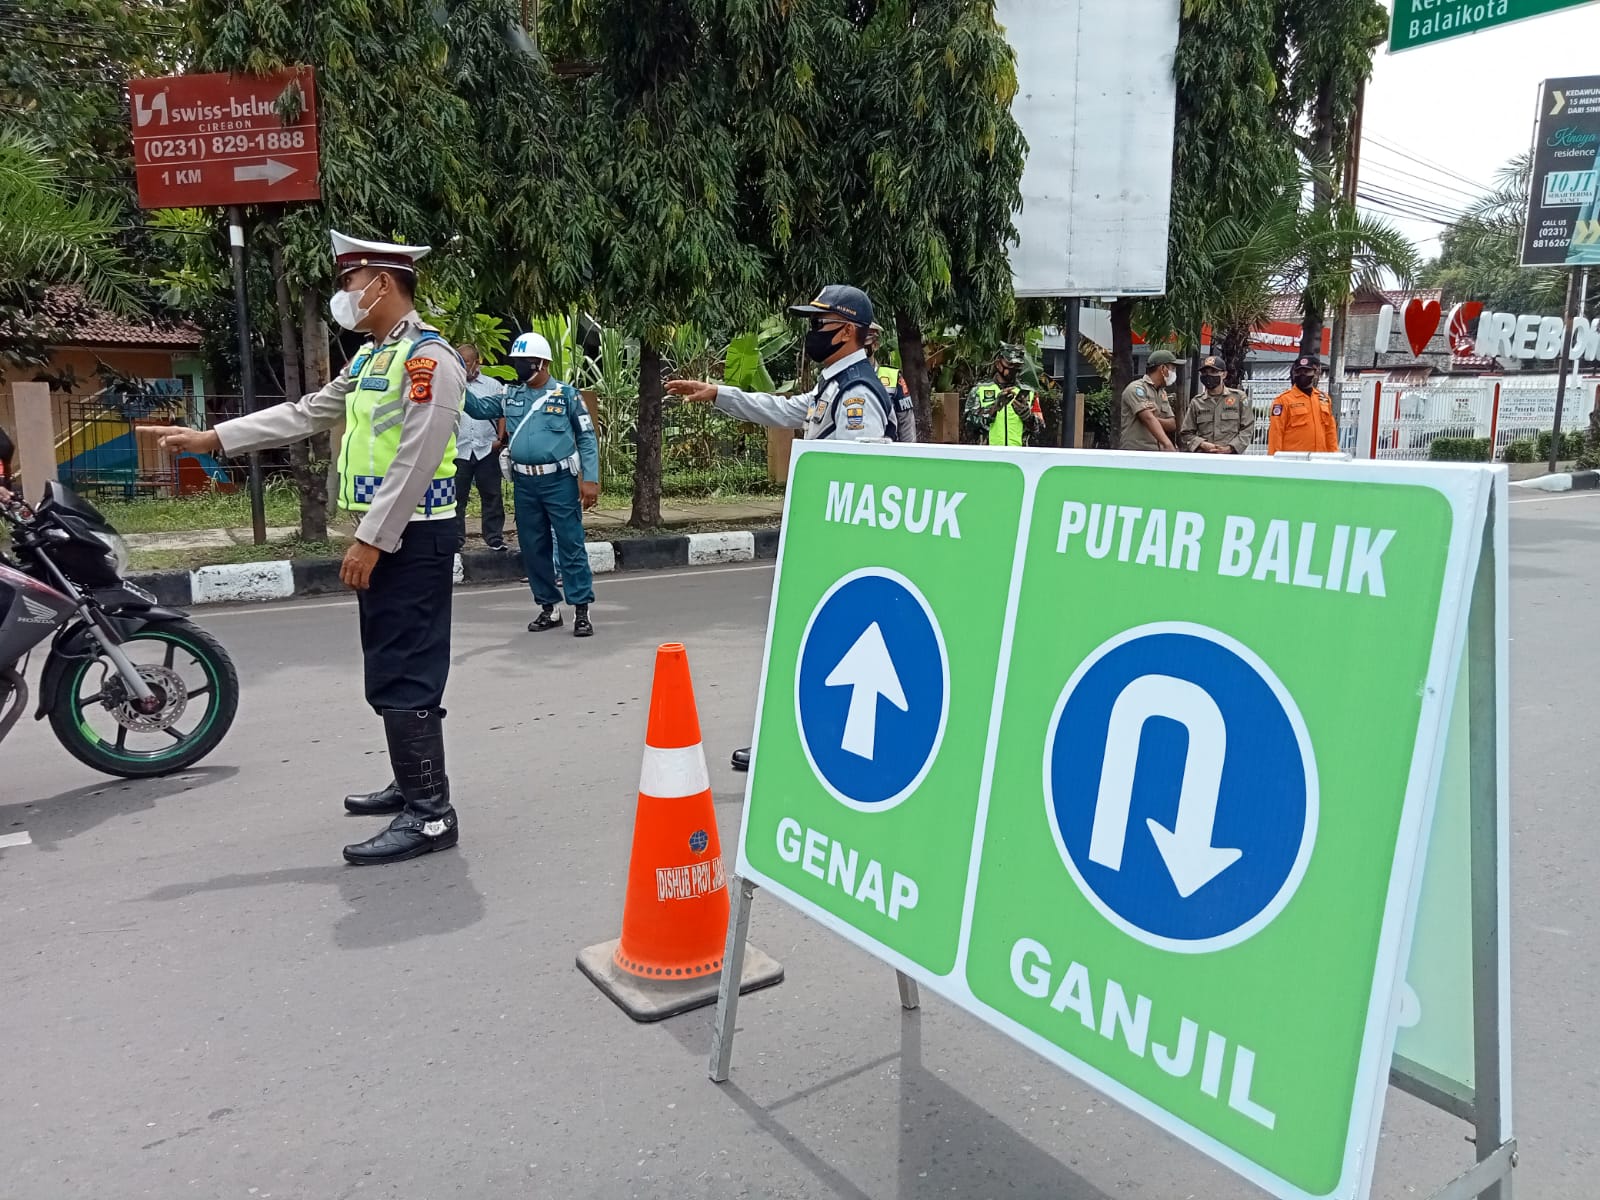 Ganjil Genap Cirebon, Ratusan Kendaraan Non Cirebon Raya Diputar Balik di 4 Lokasi